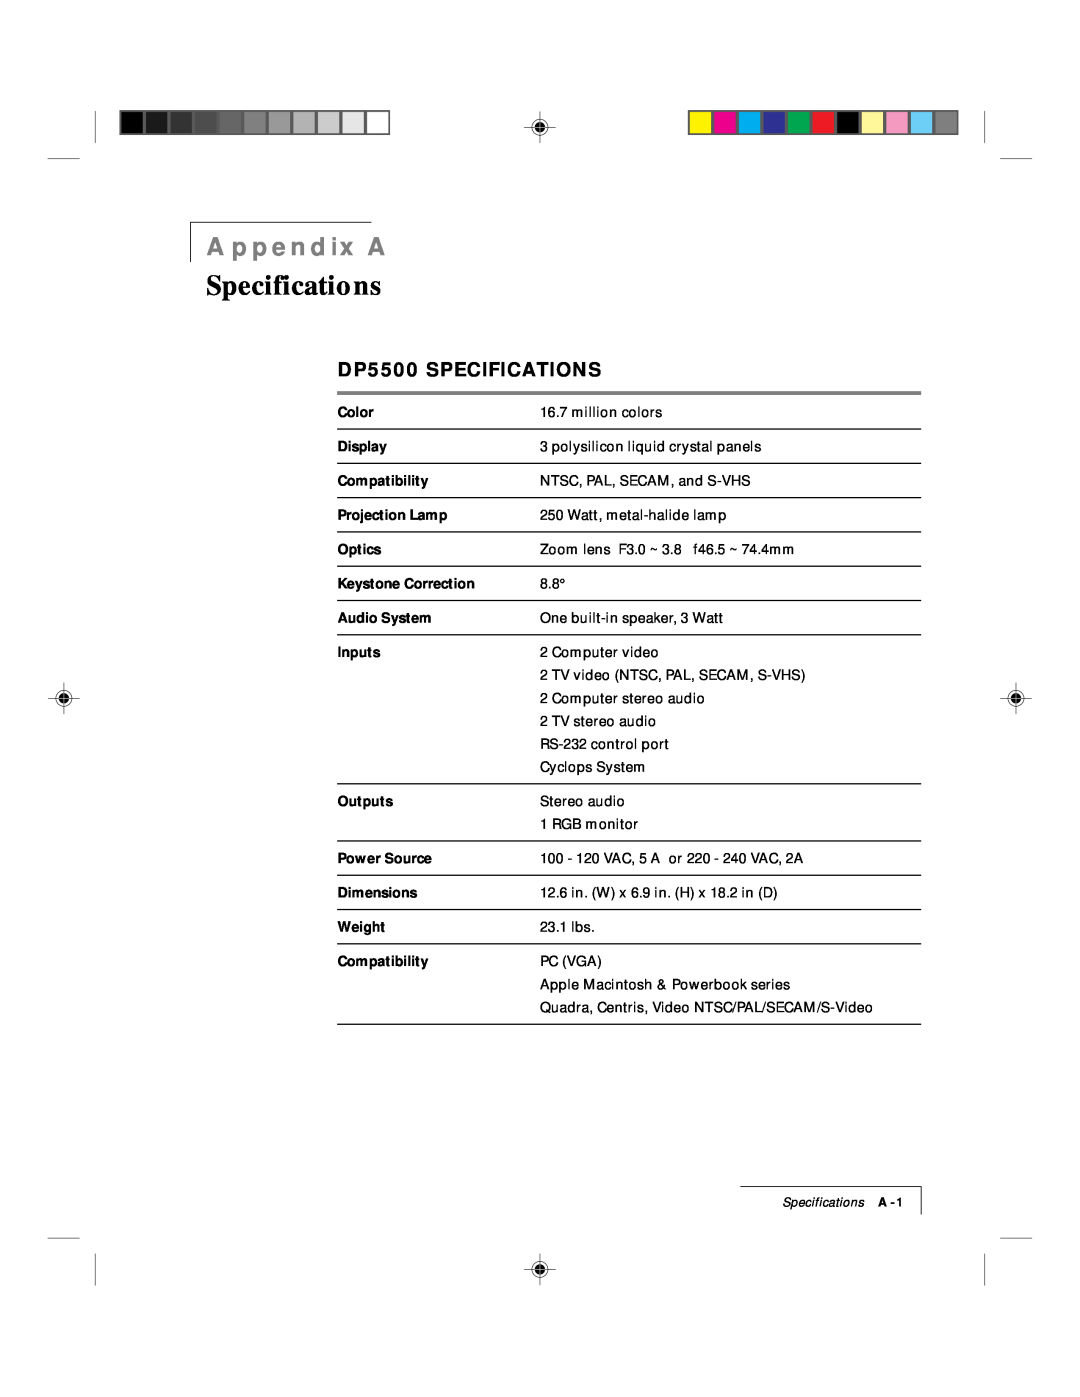 Proxima ASA manual Specifications, Appendix A, DP5500 SPECIFICATIONS 